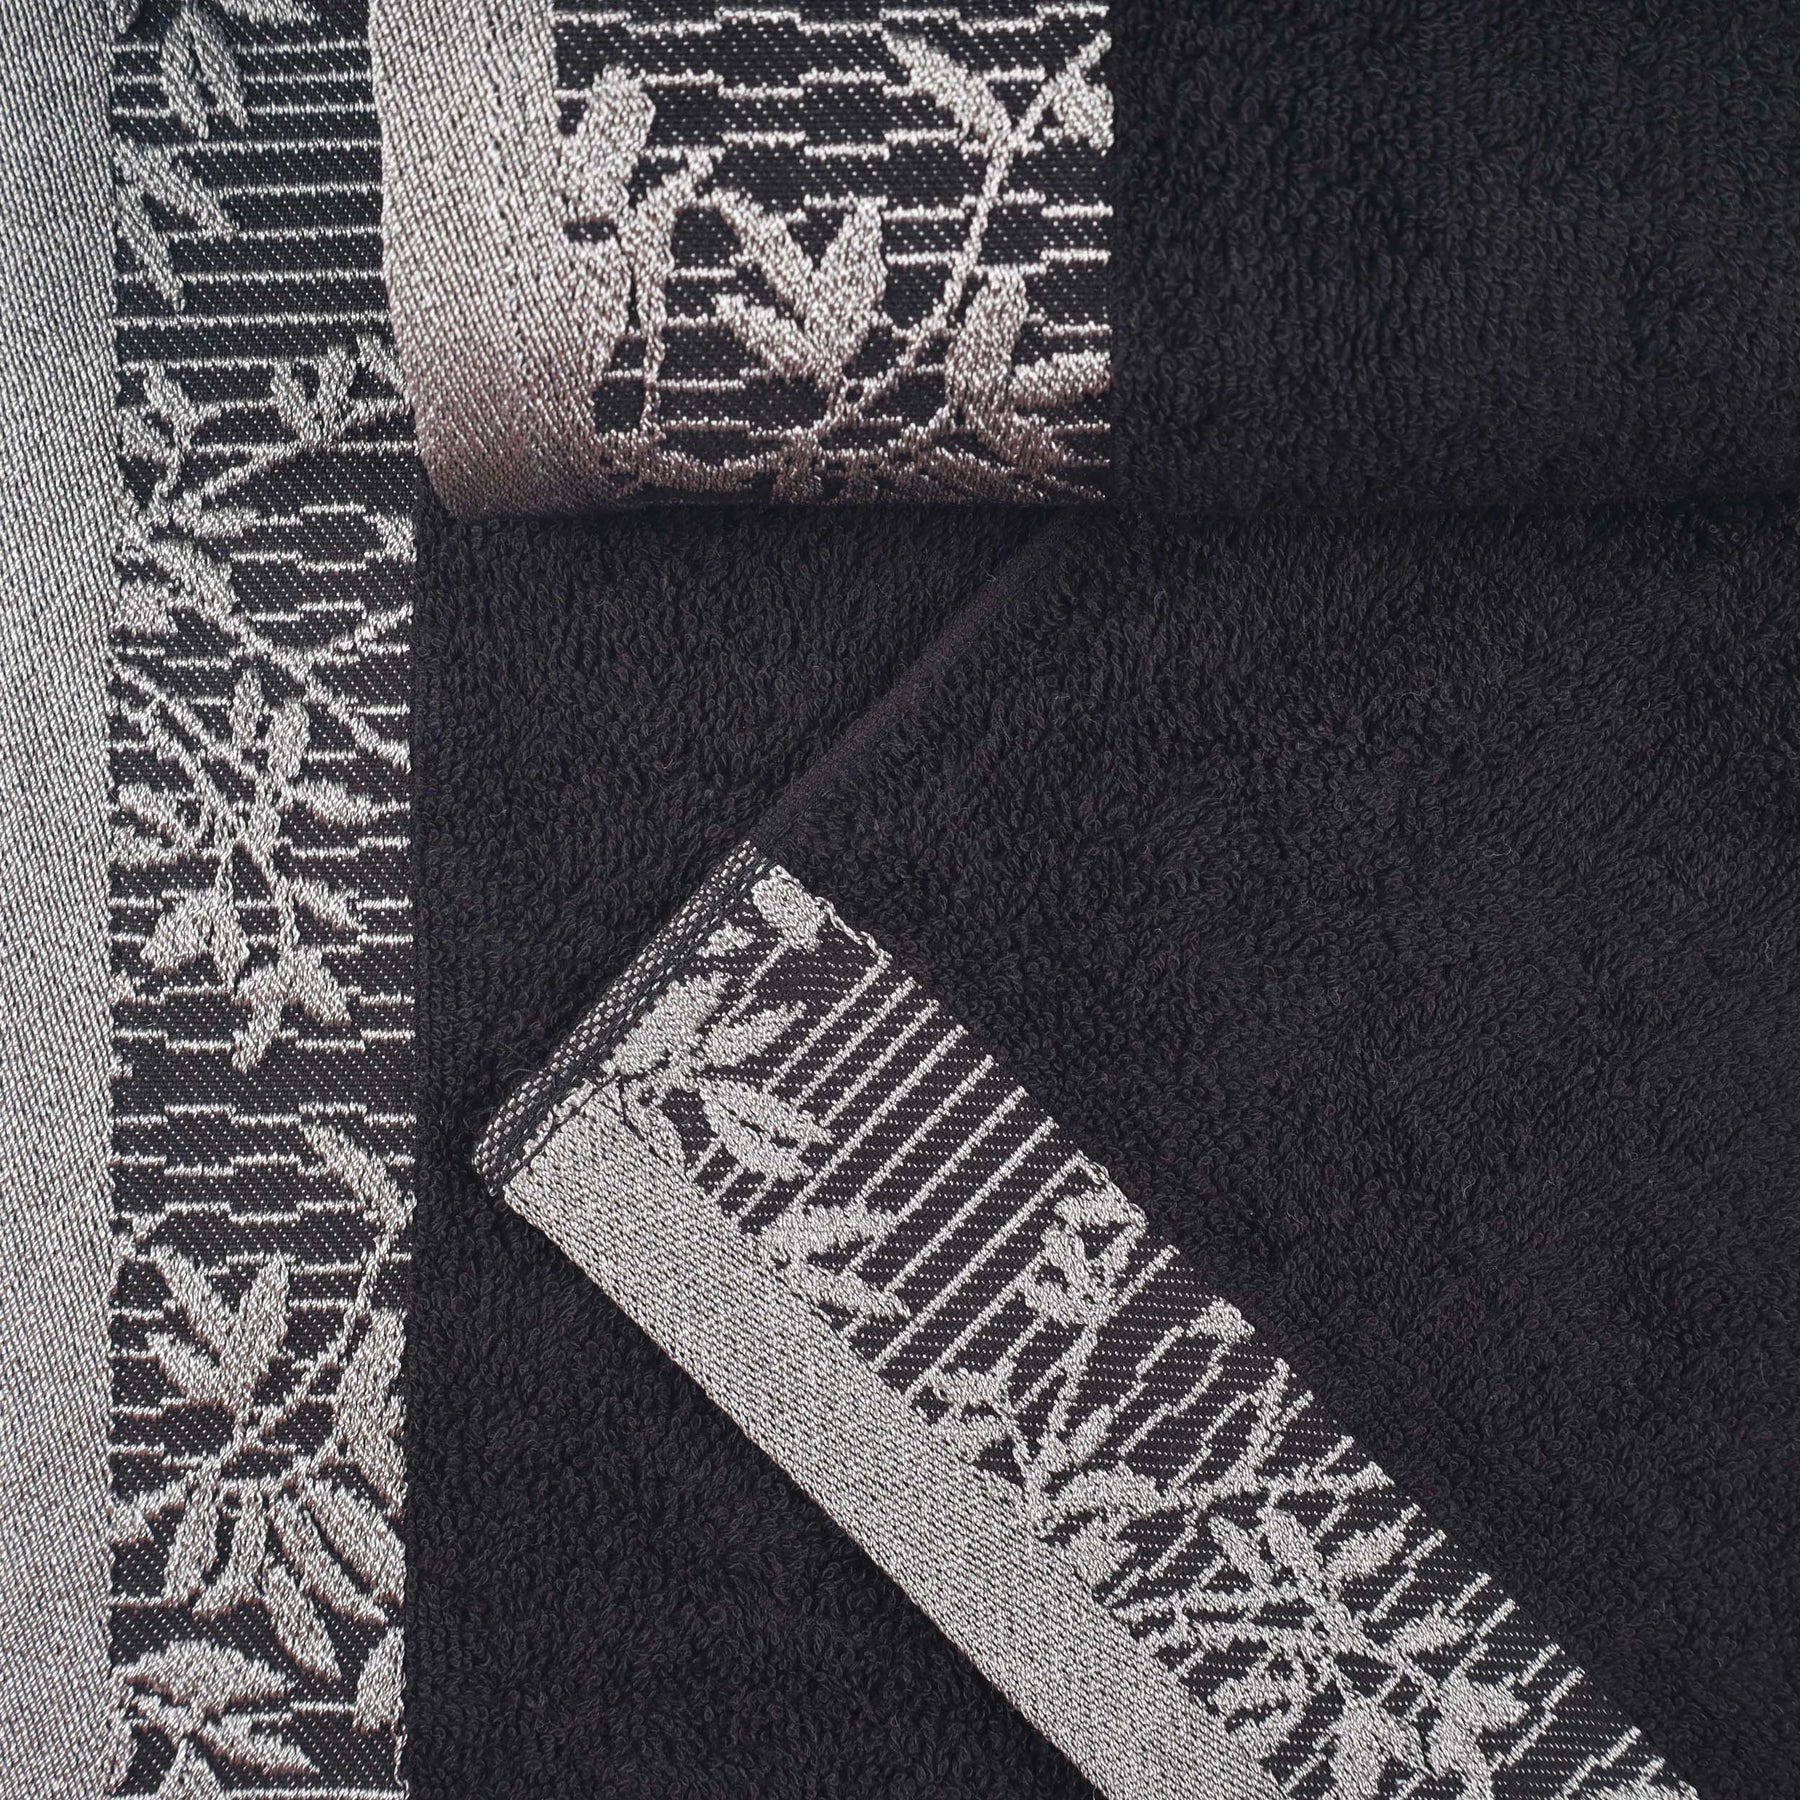 Wisteria Cotton Floral Embroidered Jacquard Border Bath Towel - Black